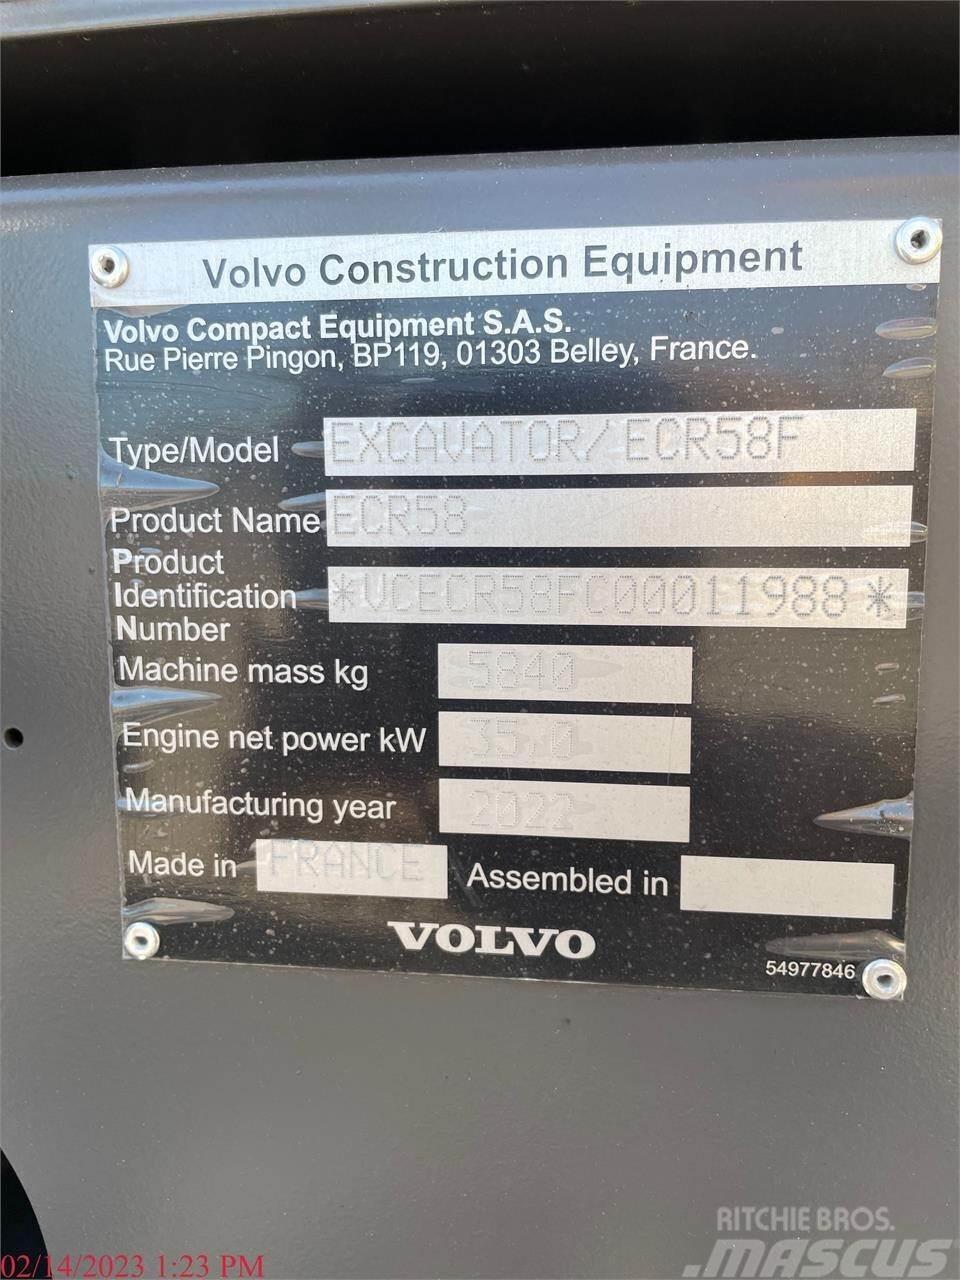 Volvo ECR58F Roomikekskavaatorid